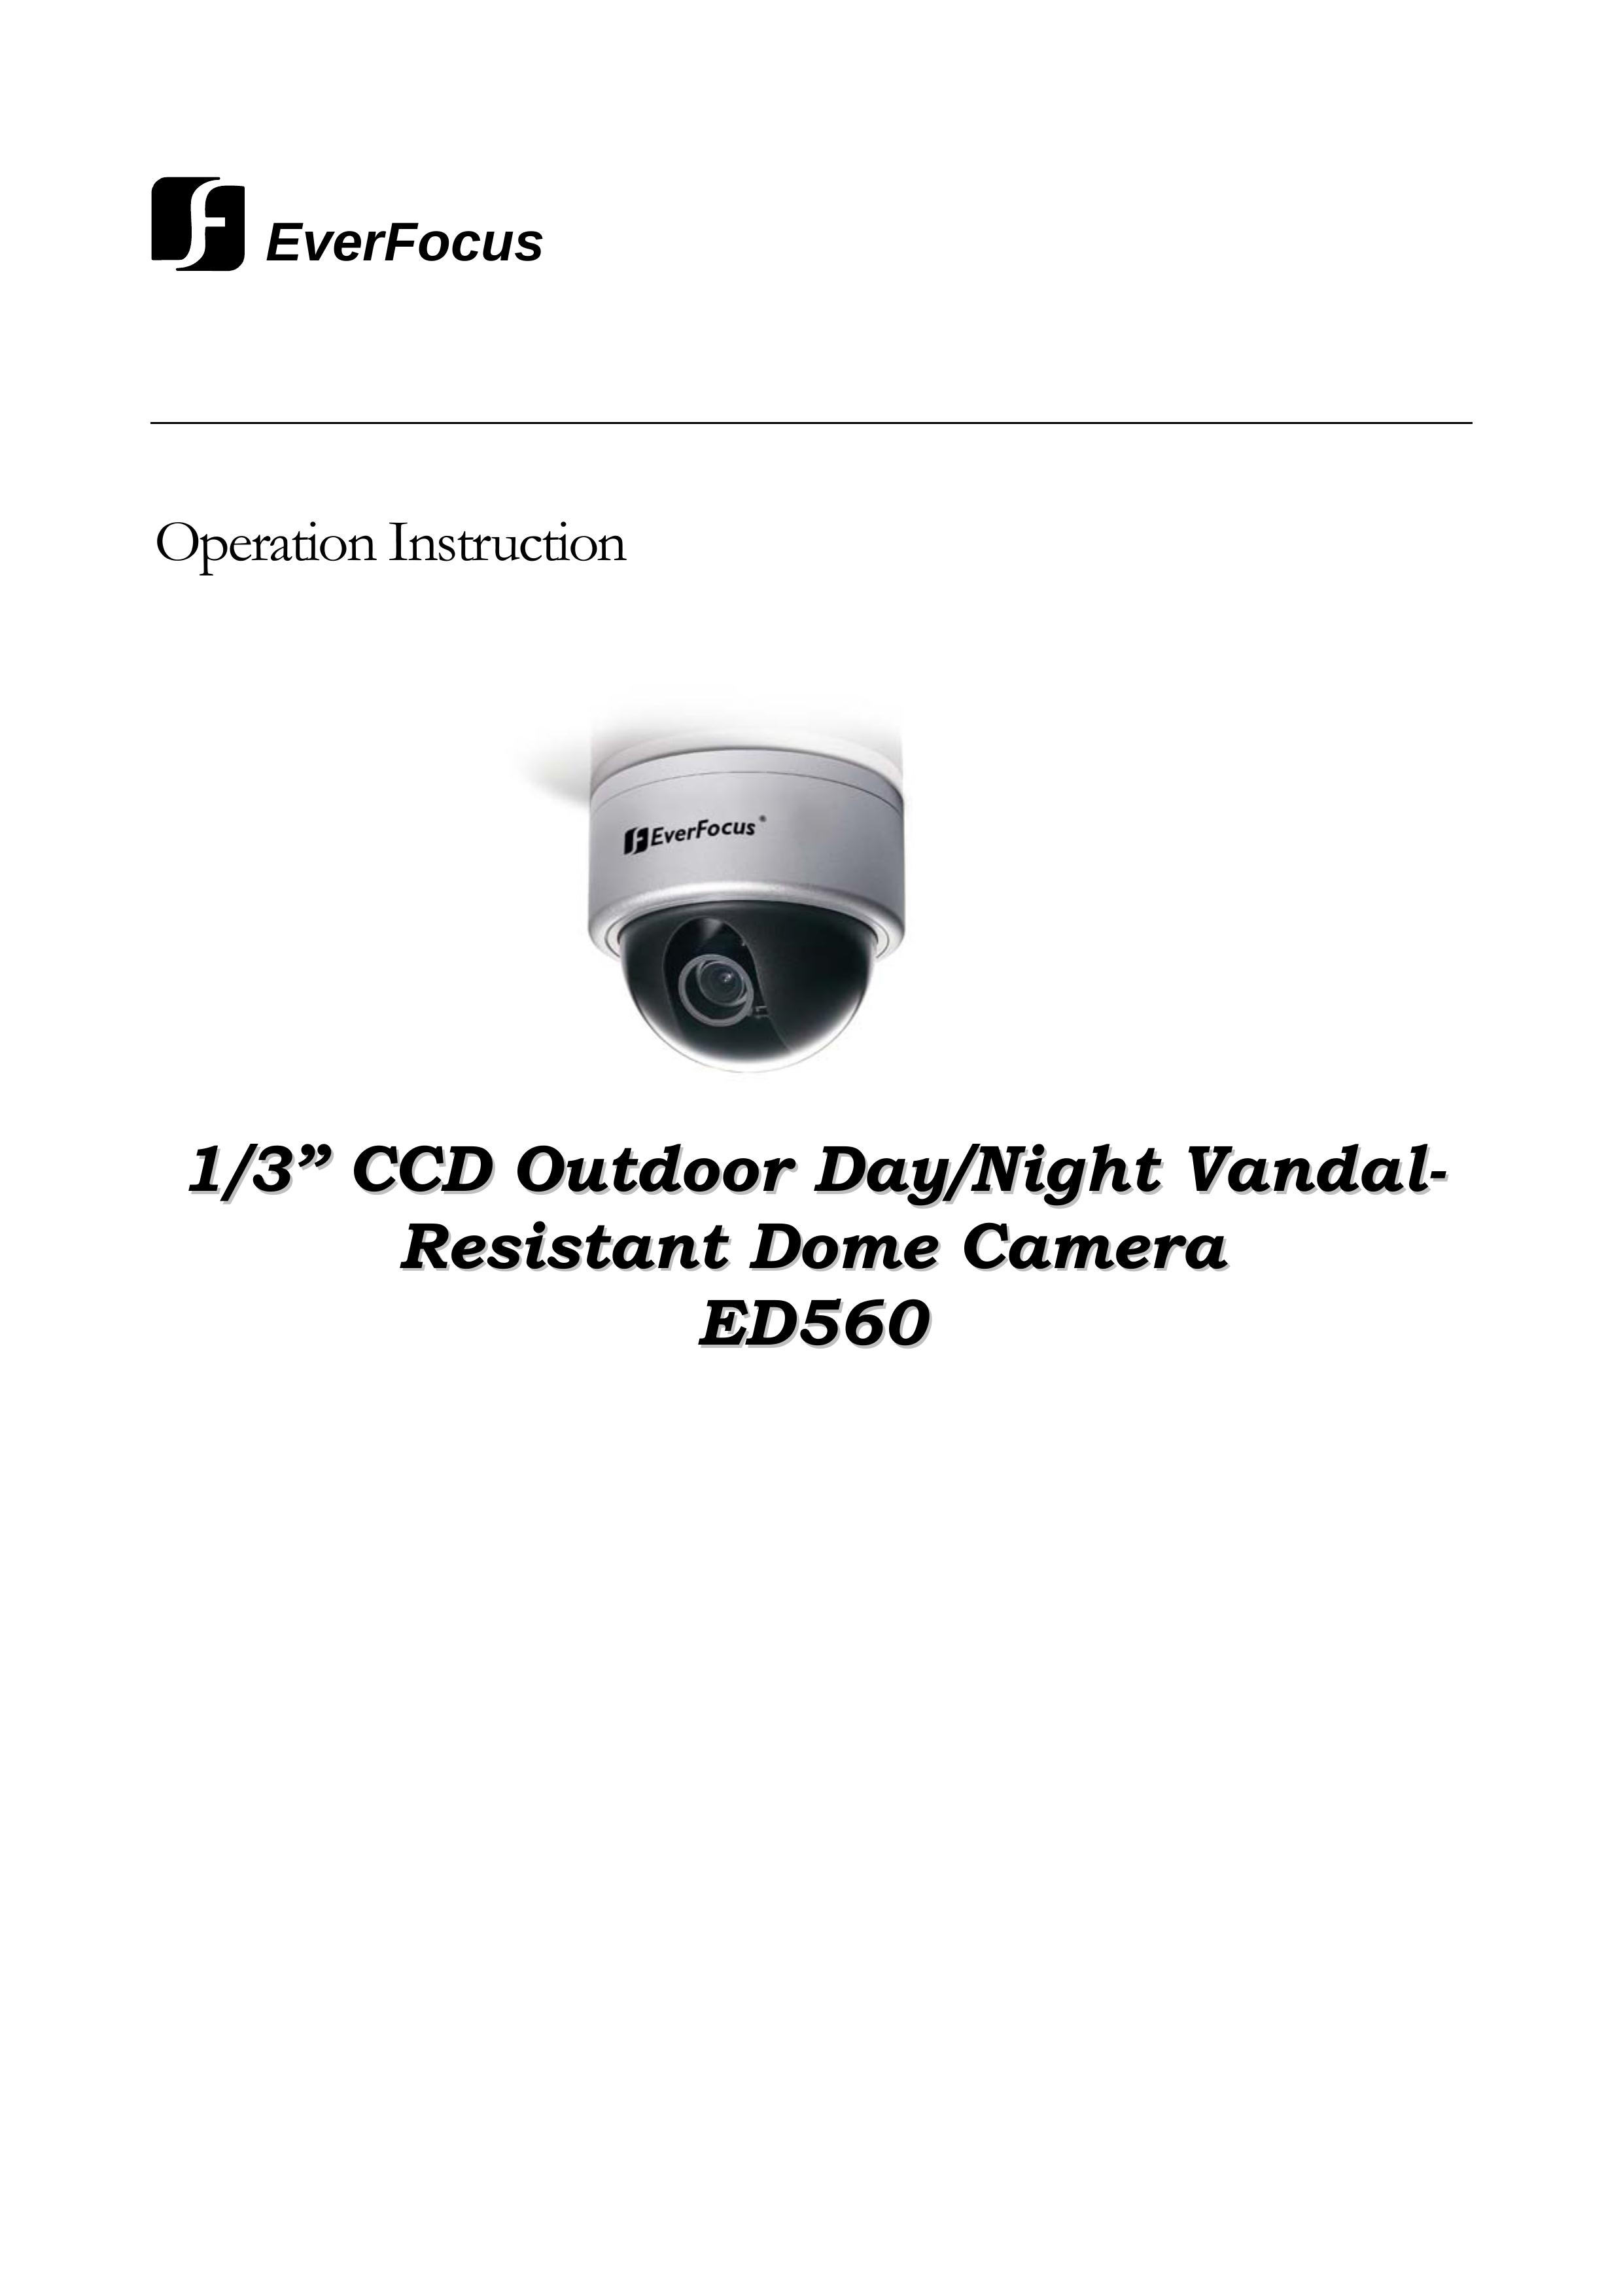 EverFocus ED560 Security Camera User Manual